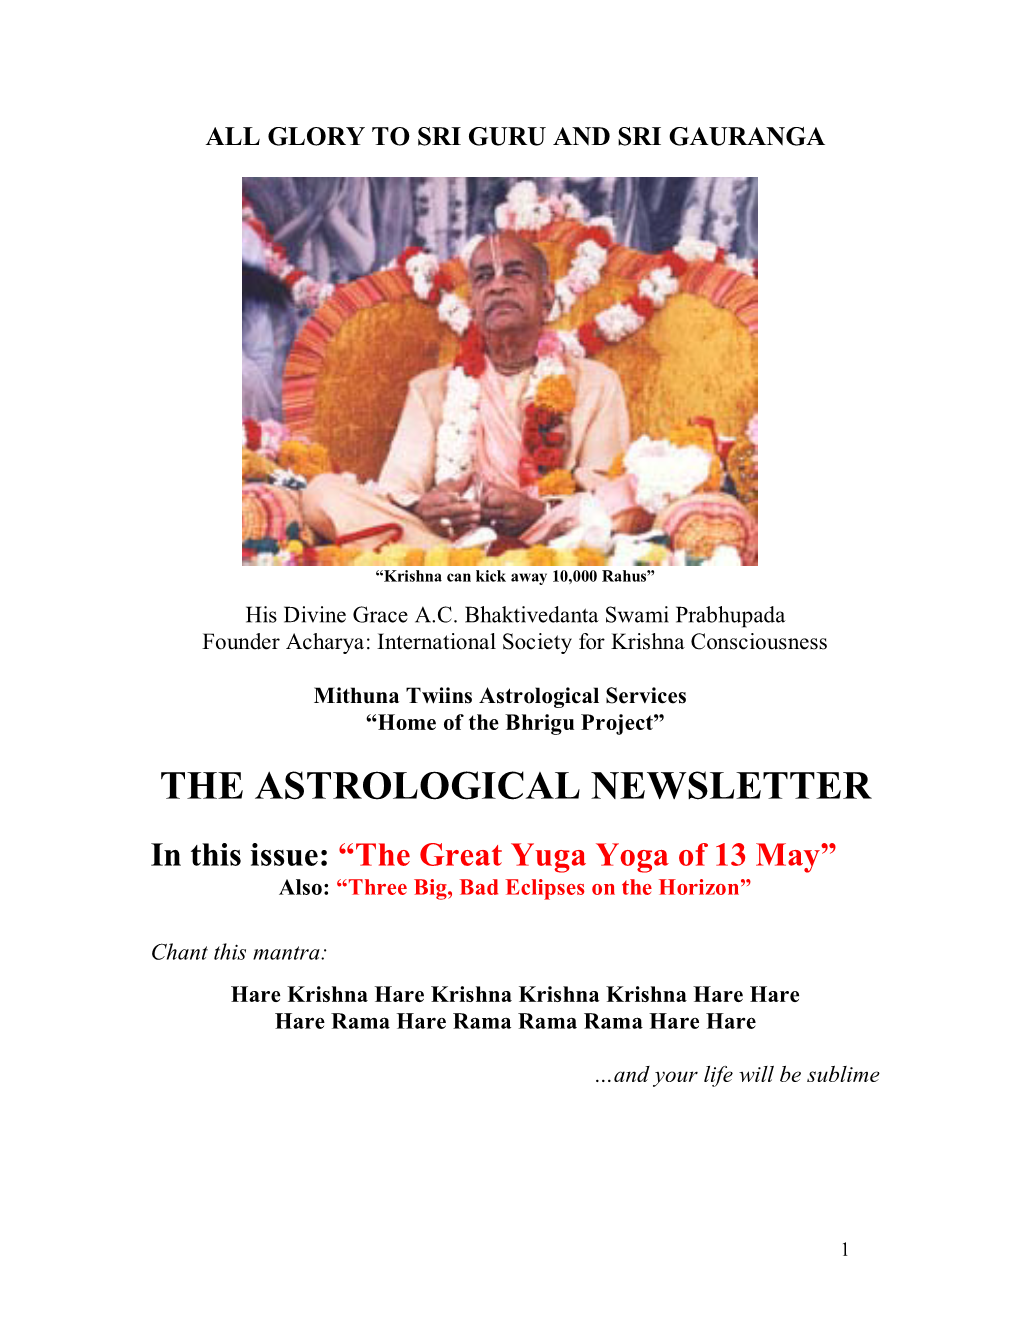 The Astrological Newsletter